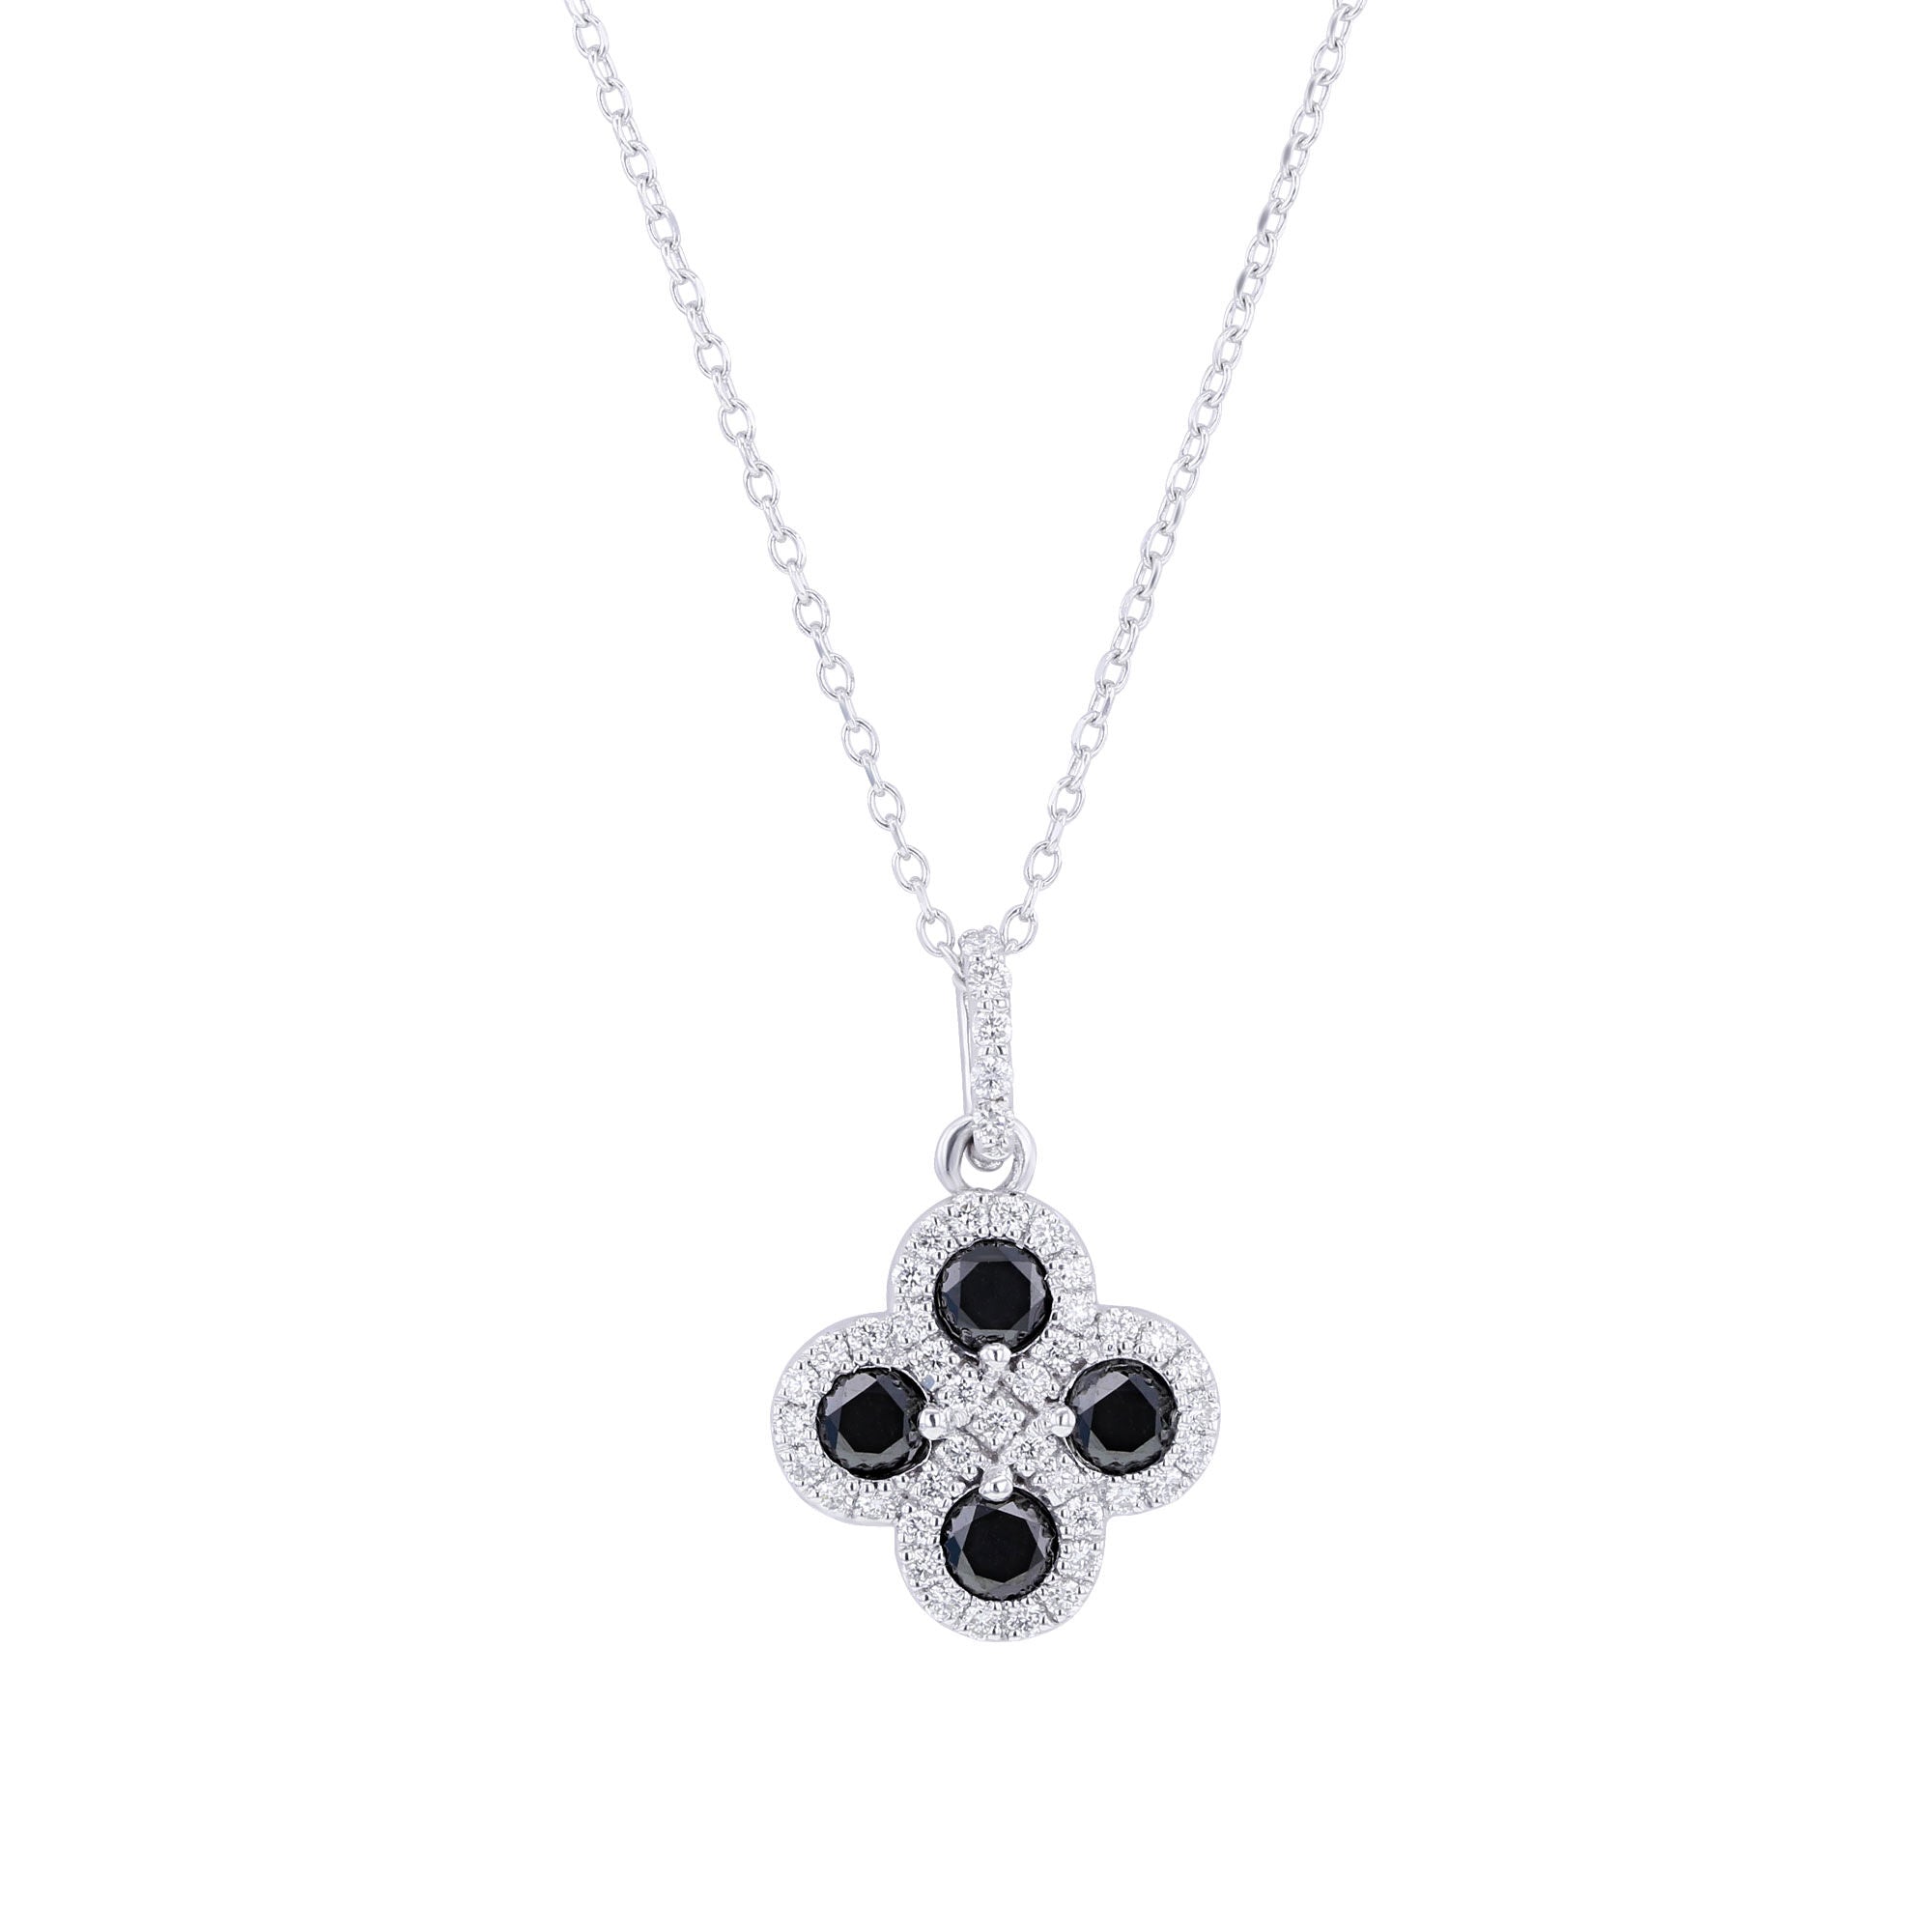 Double Diamond Flower Necklace